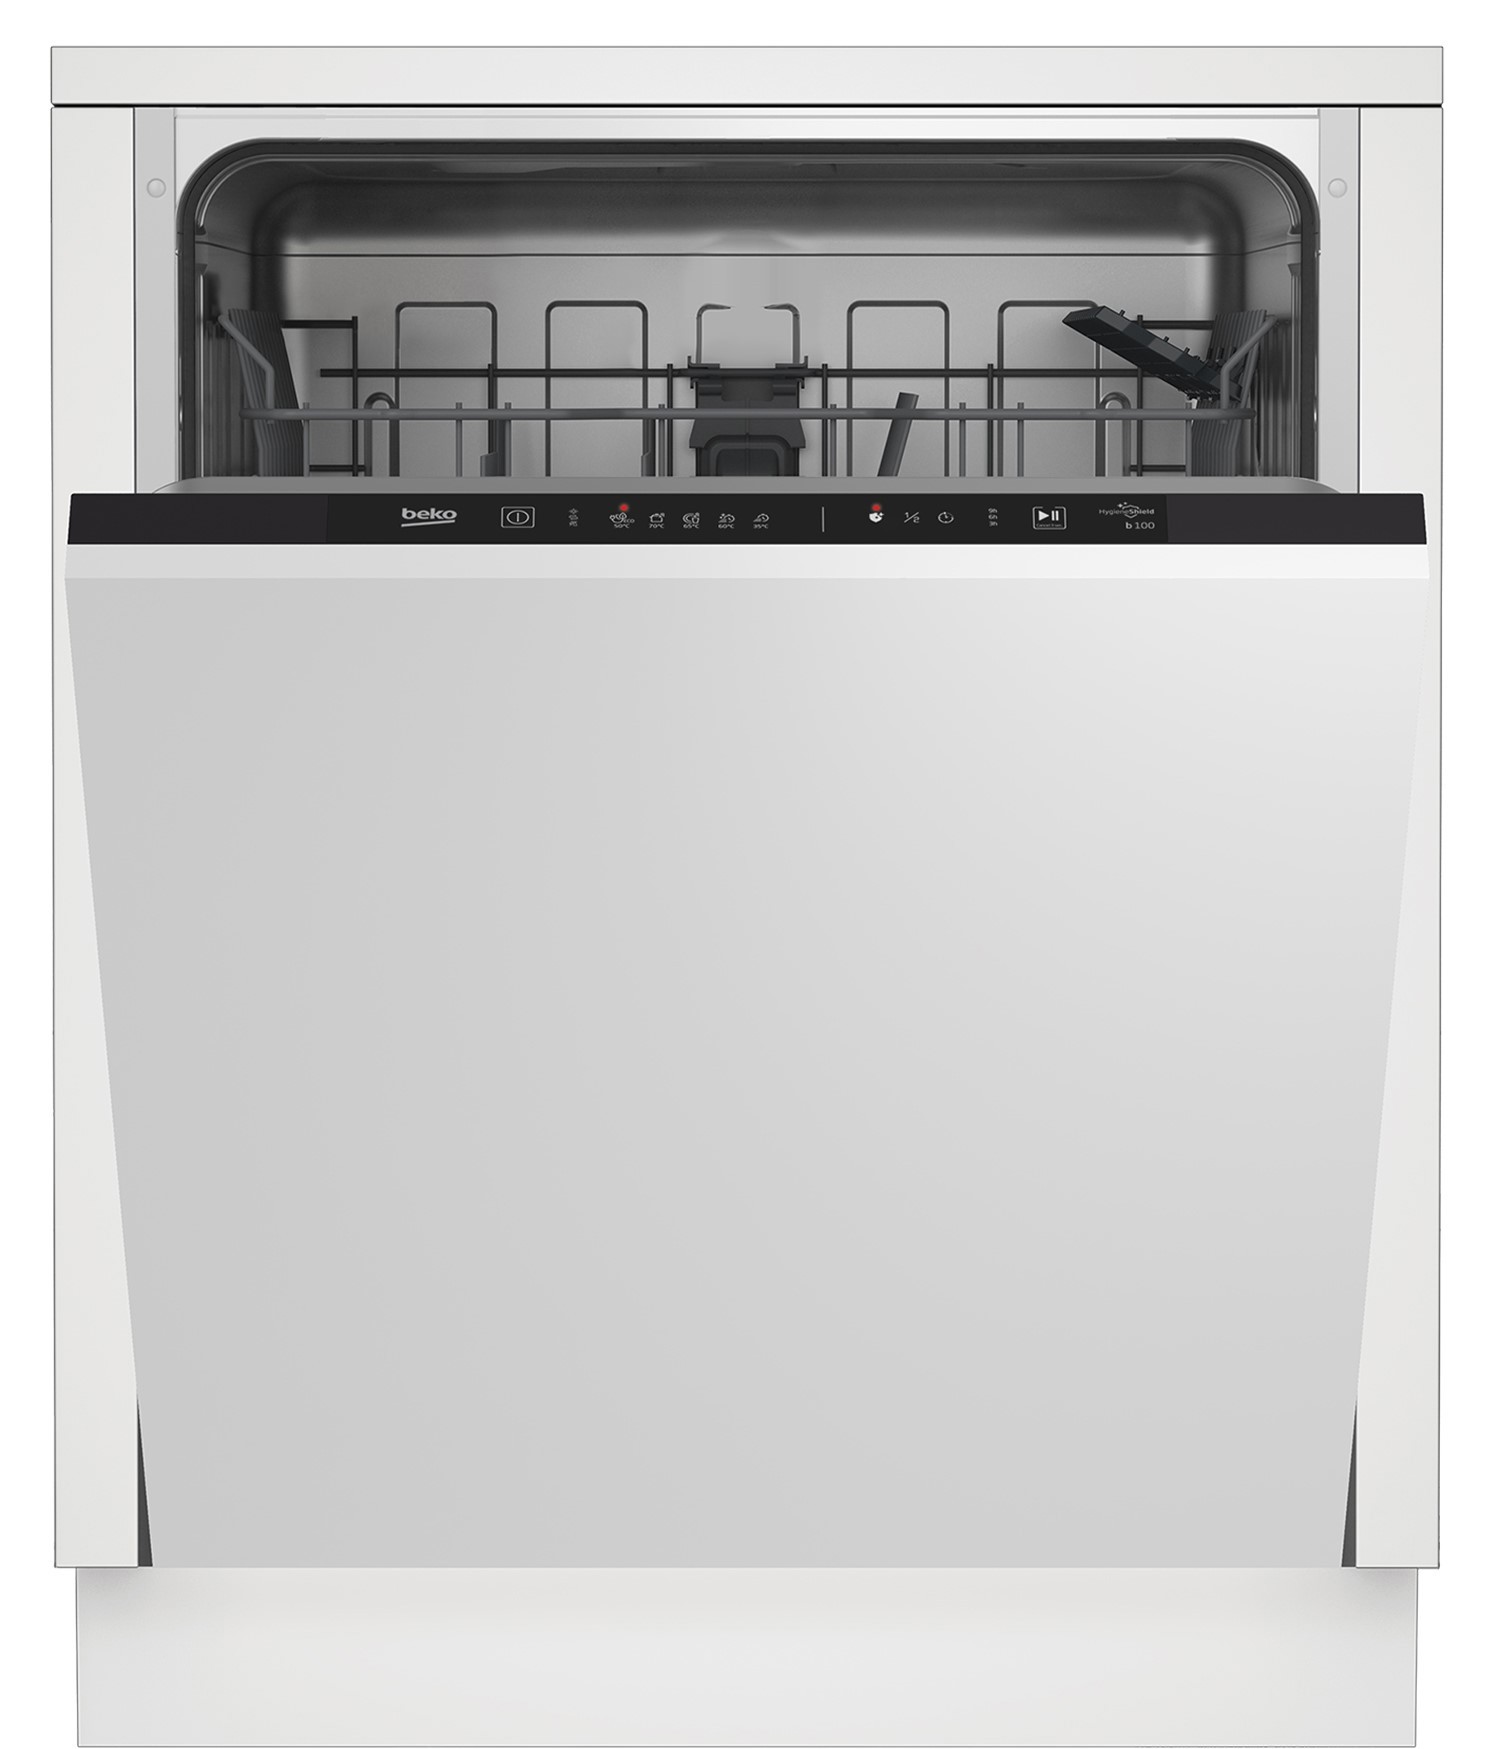 90550553 Посудомоечная машина BDIN15320 59.8 см 5 программ цвет белый STLM-0277012 BEKO